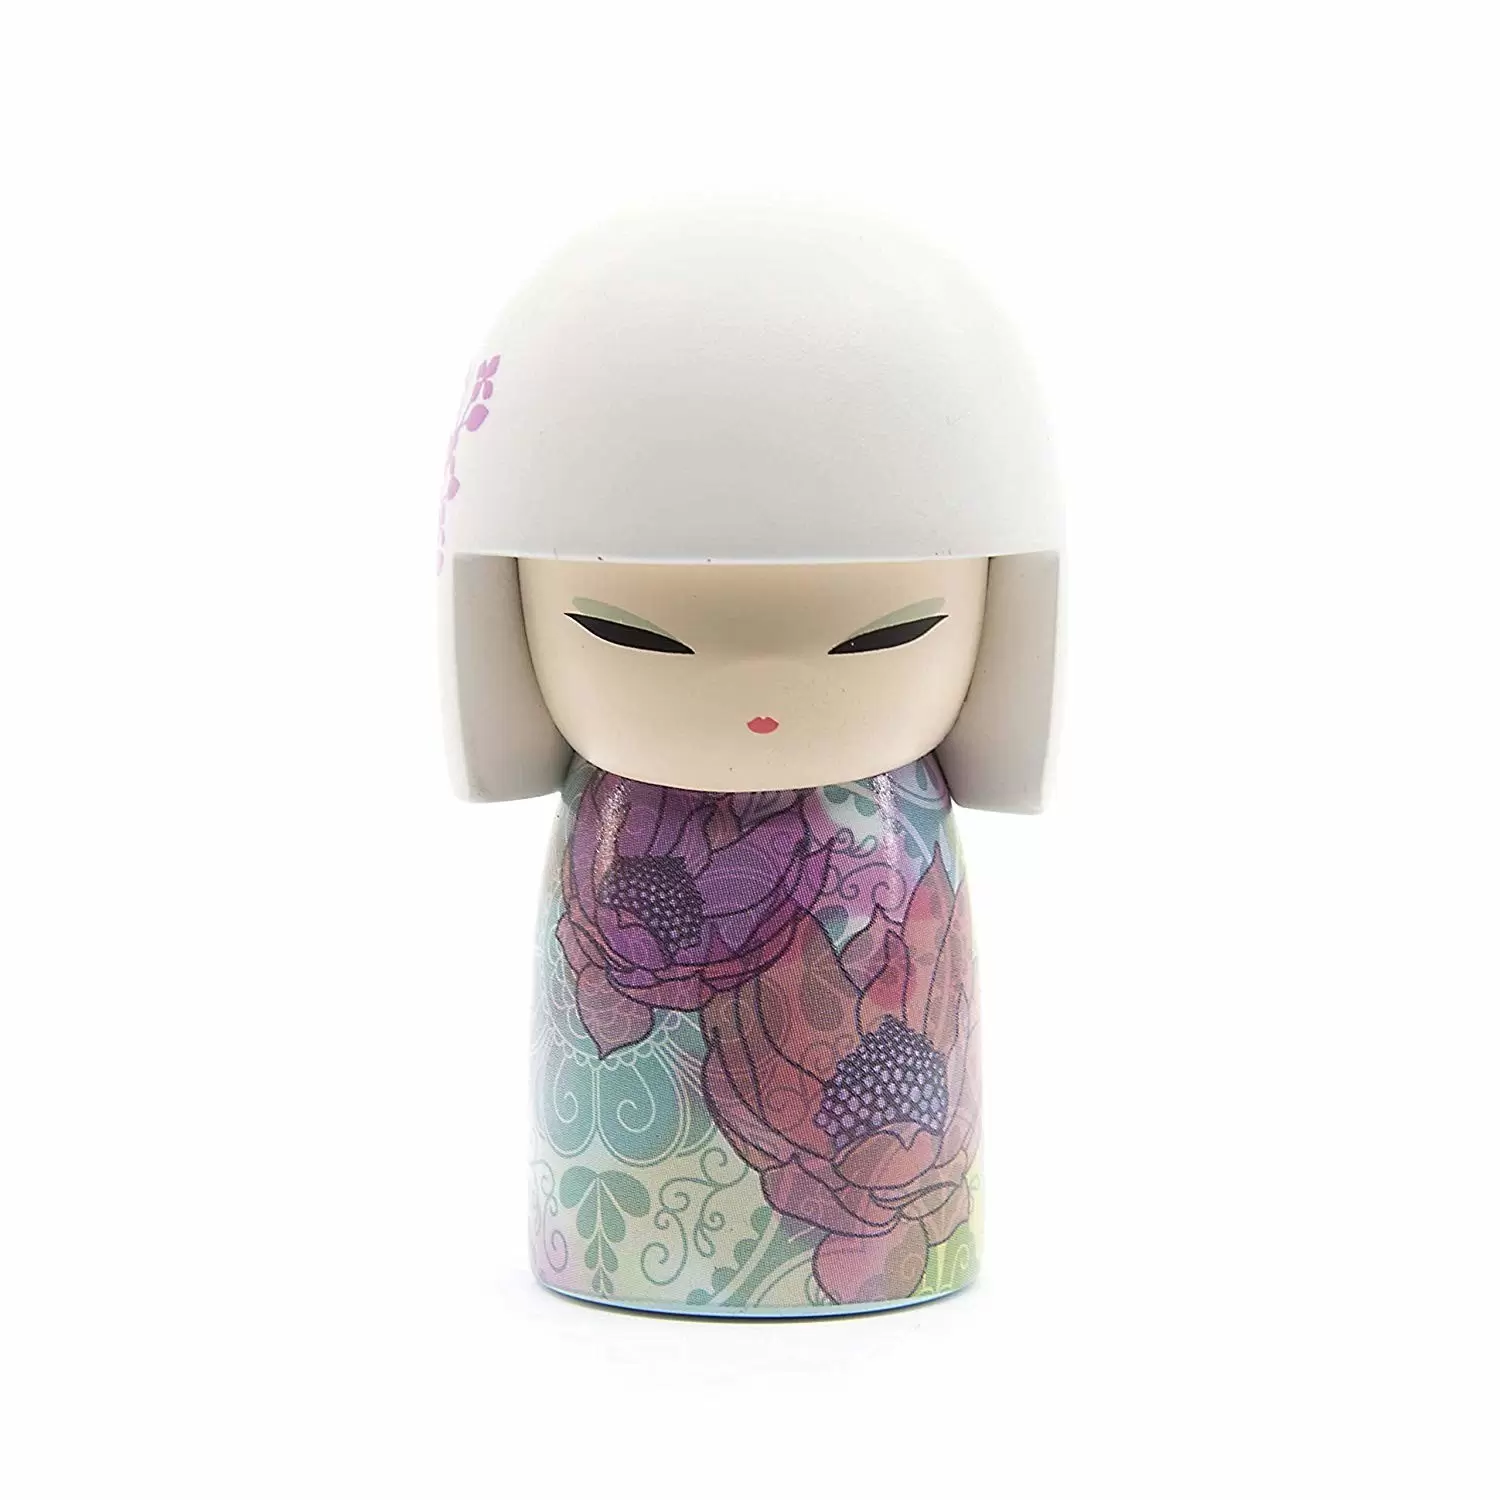 Kimmidoll Mini Doll Figurine Mieka 'Embrace' 